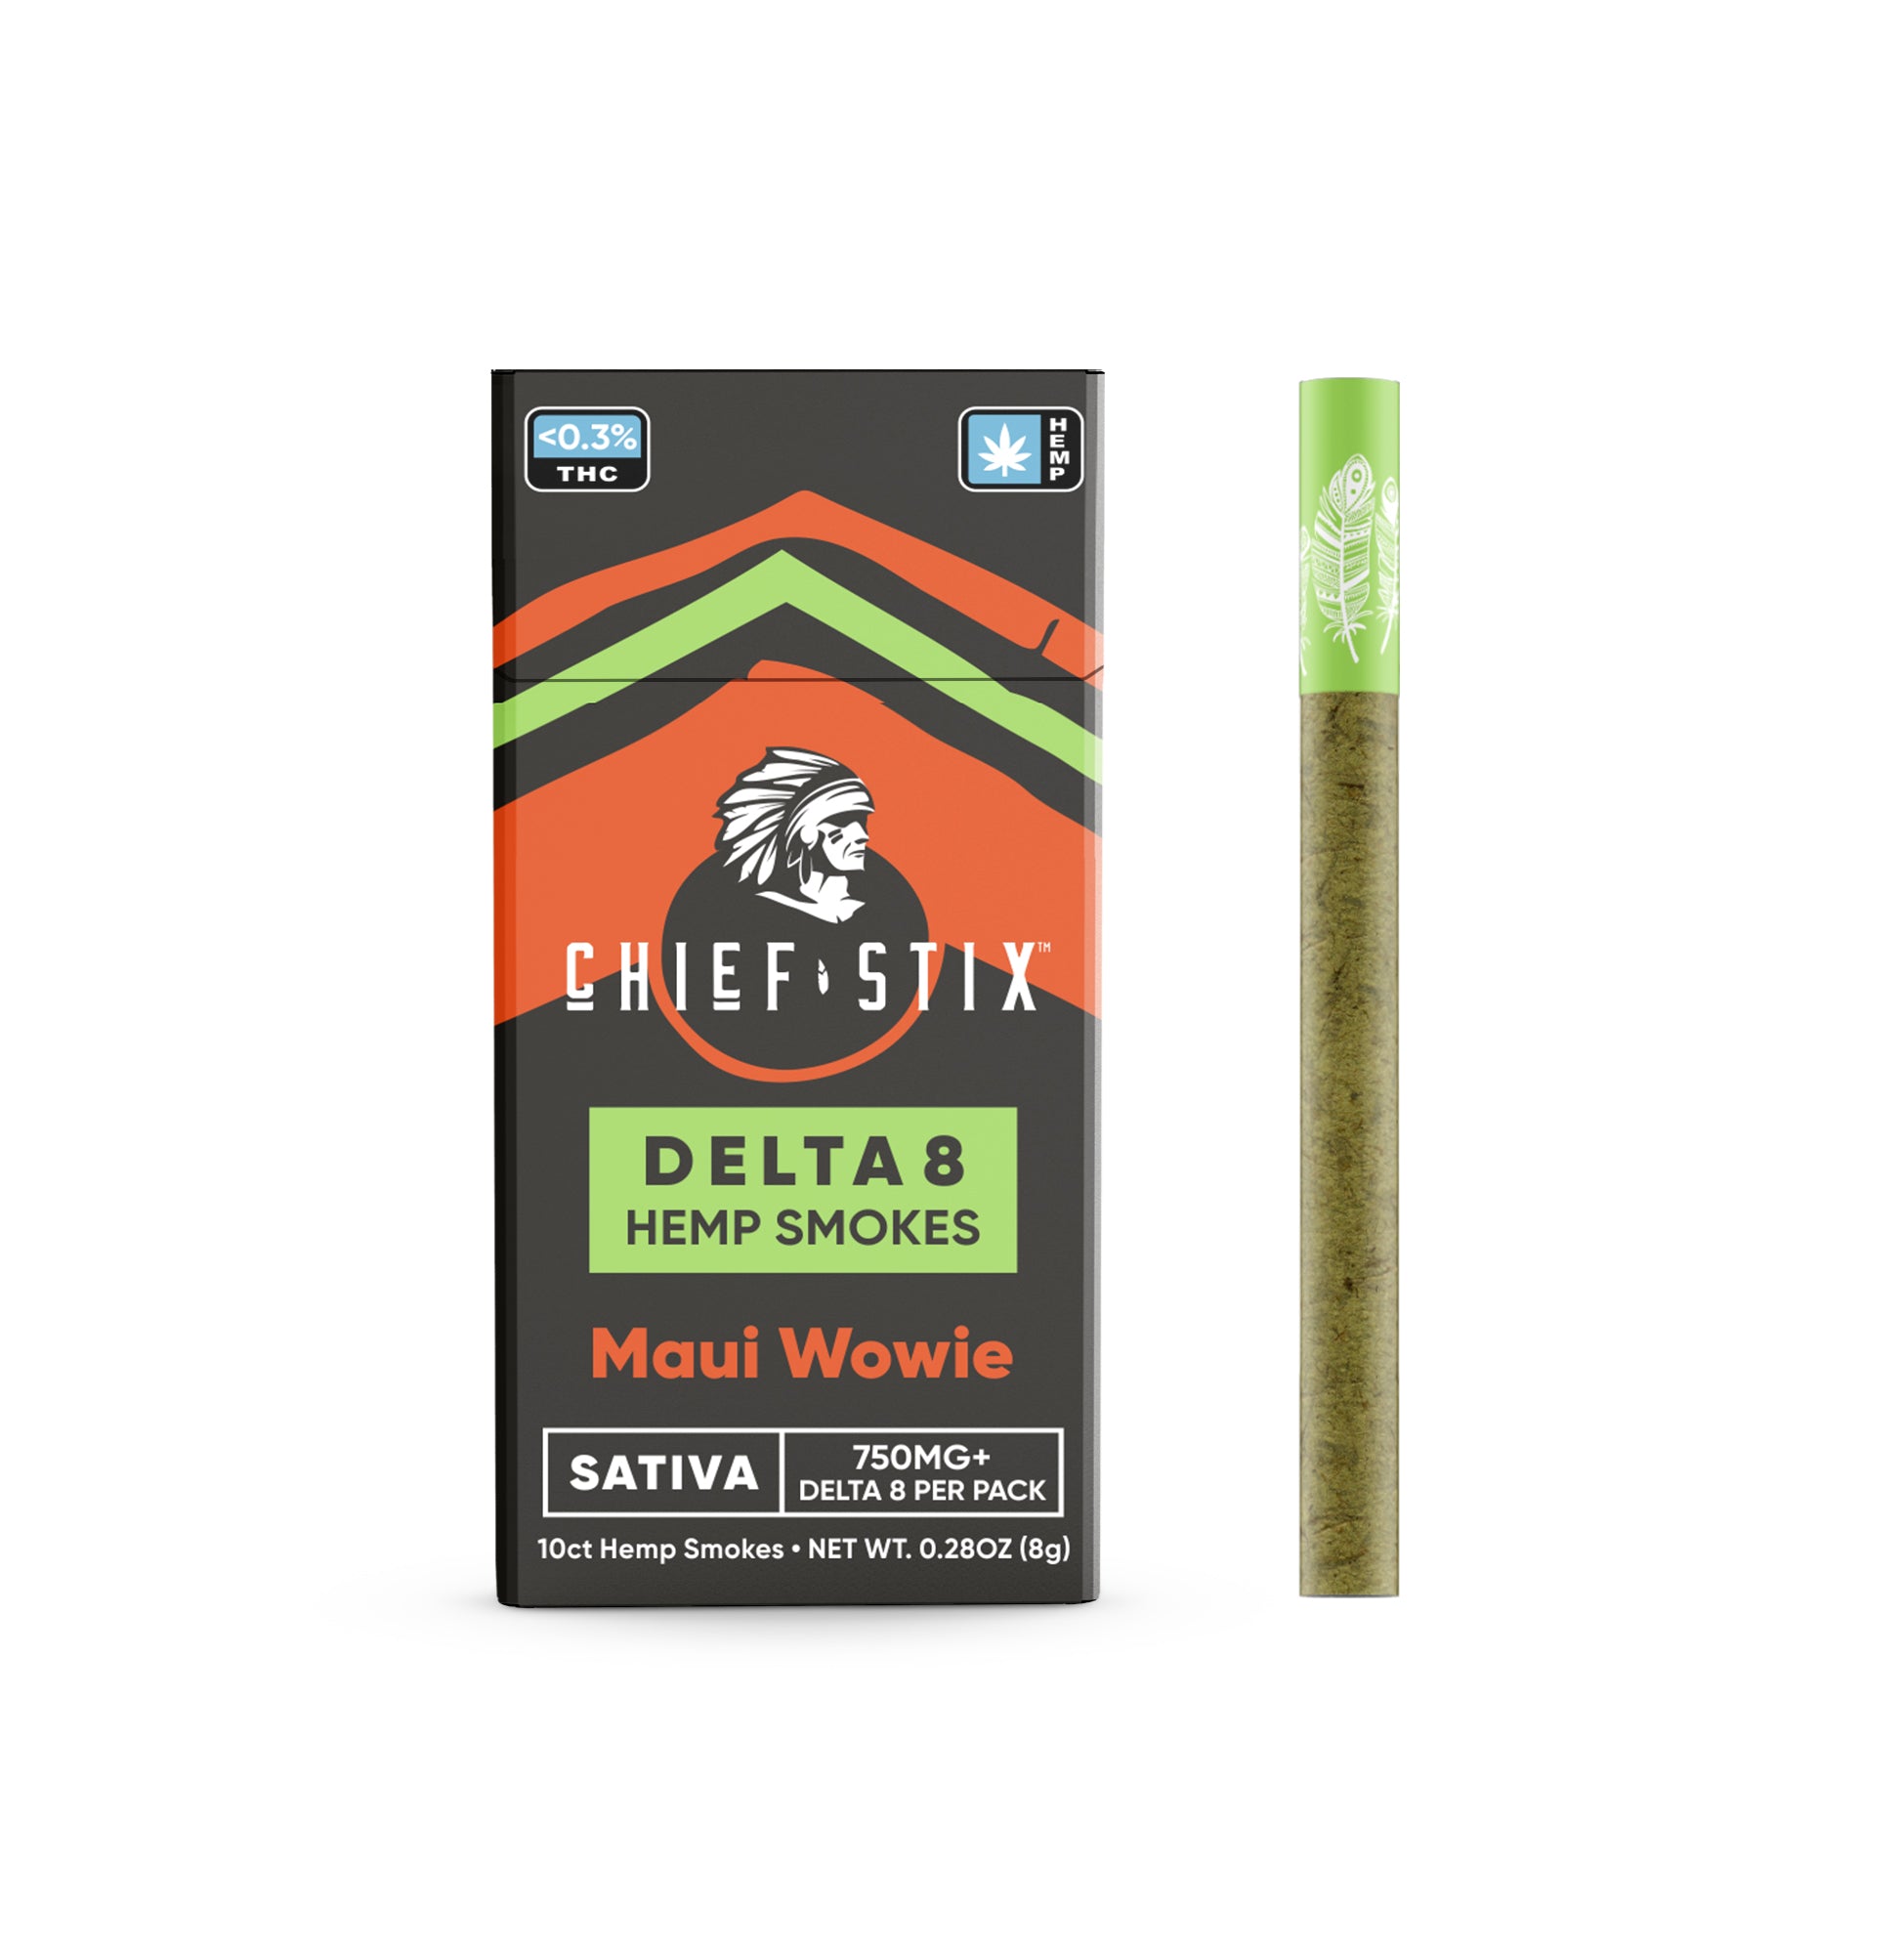 Delta 8 Hemp Smokes - Sativa Maui Wowie 10ct (750mg)